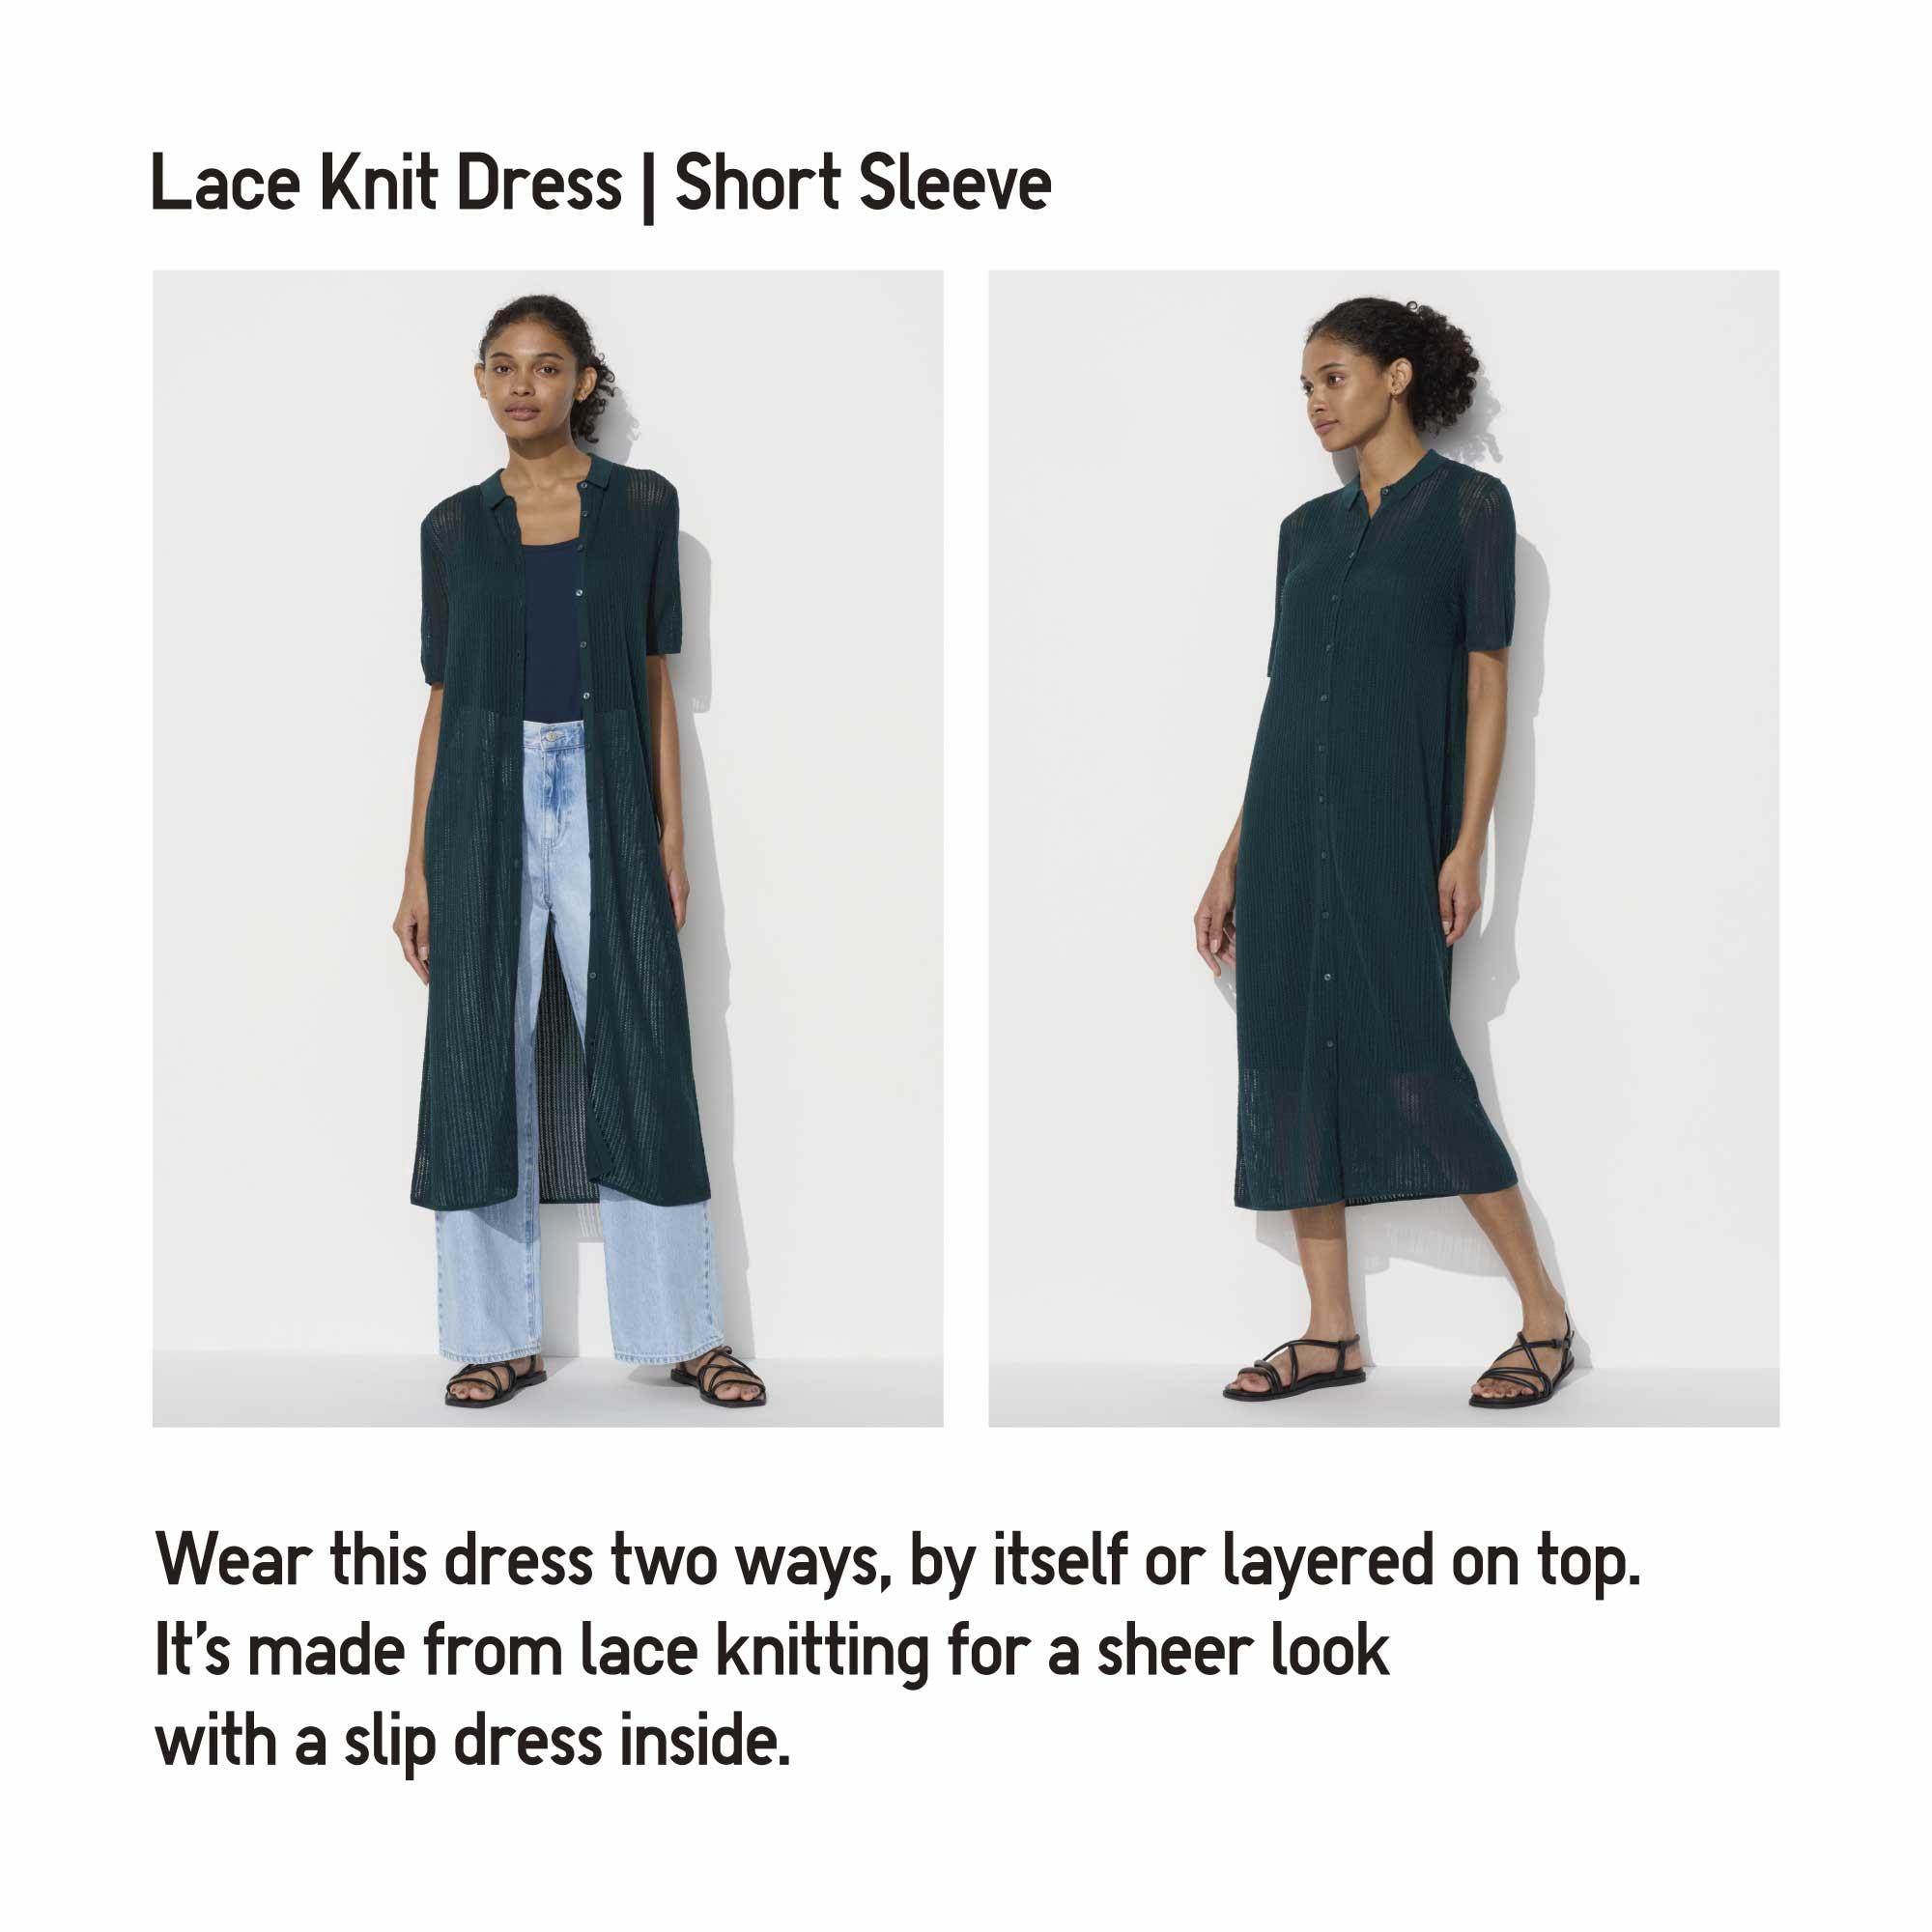 LACE KNIT DRESS | SHORT SLEEVE